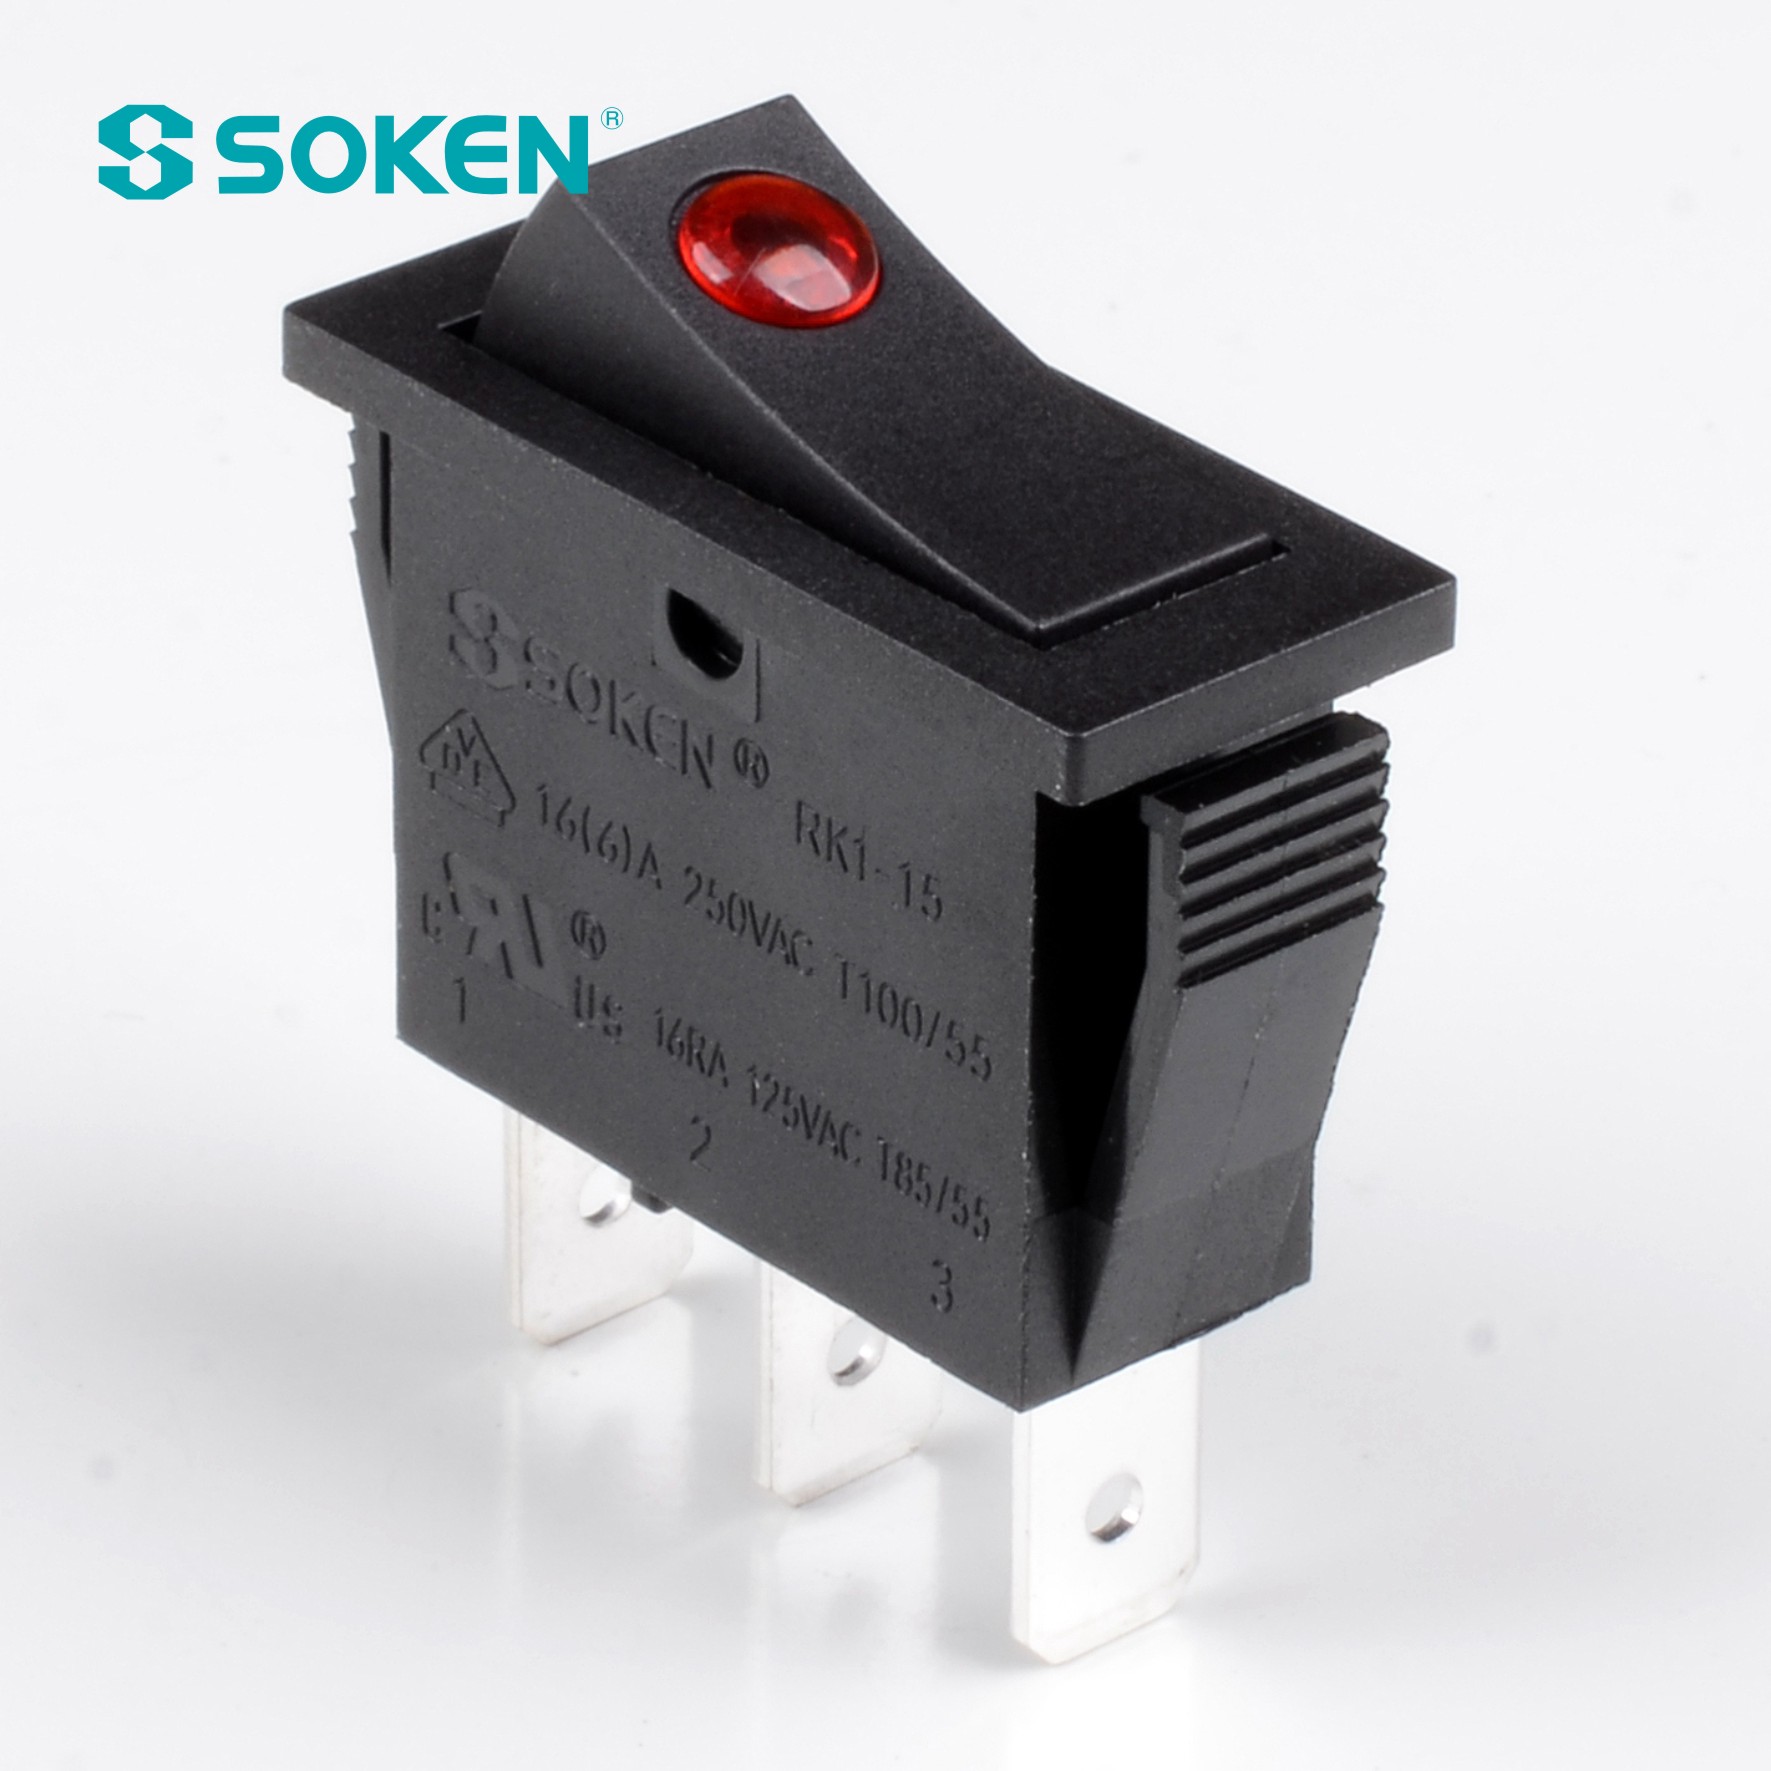 Soken Rk1-15 1X1n Lens pakubva paRocker Switch